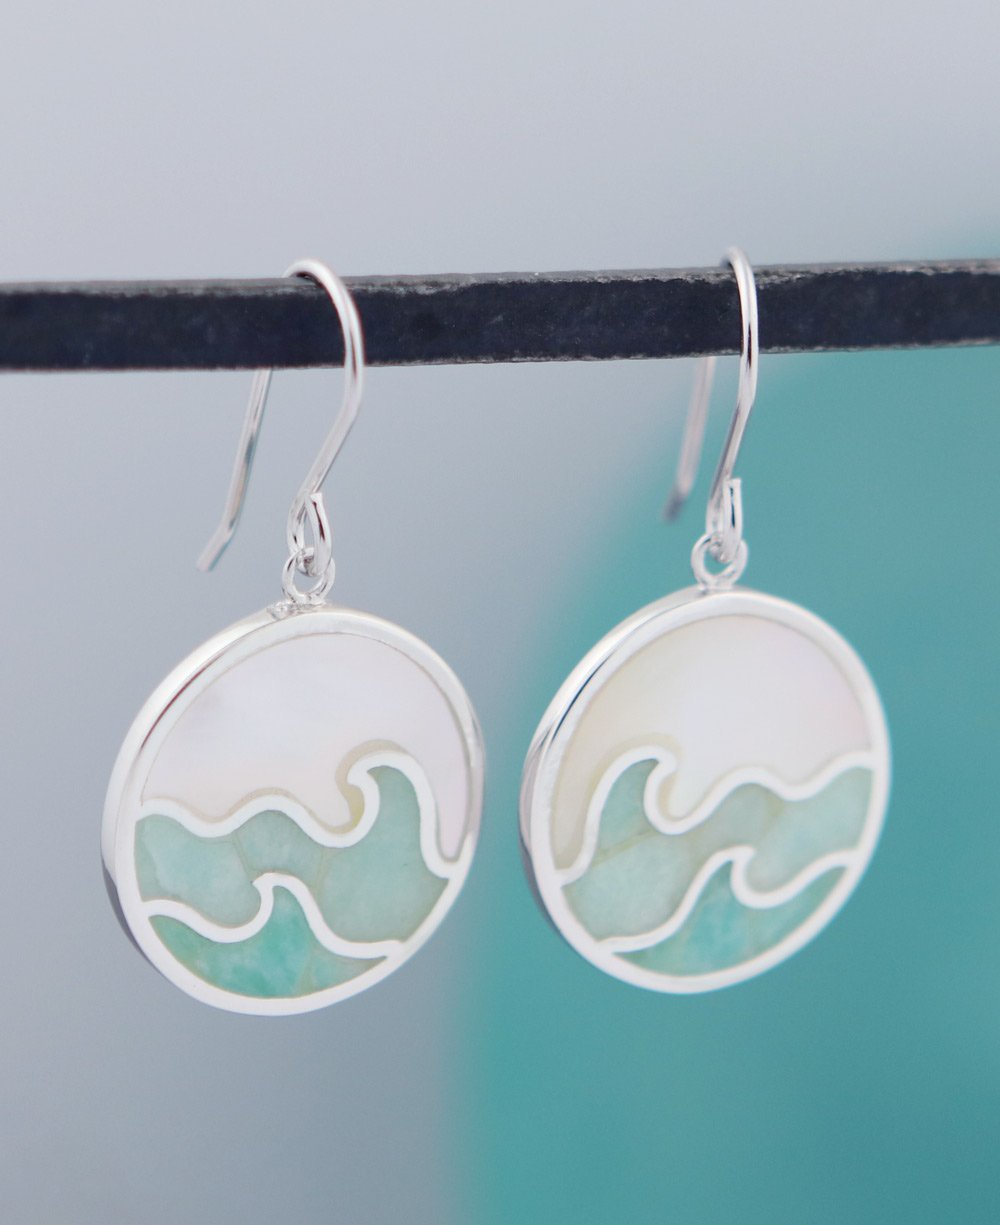 Go With the Flow Ocean Earrings - Earrings